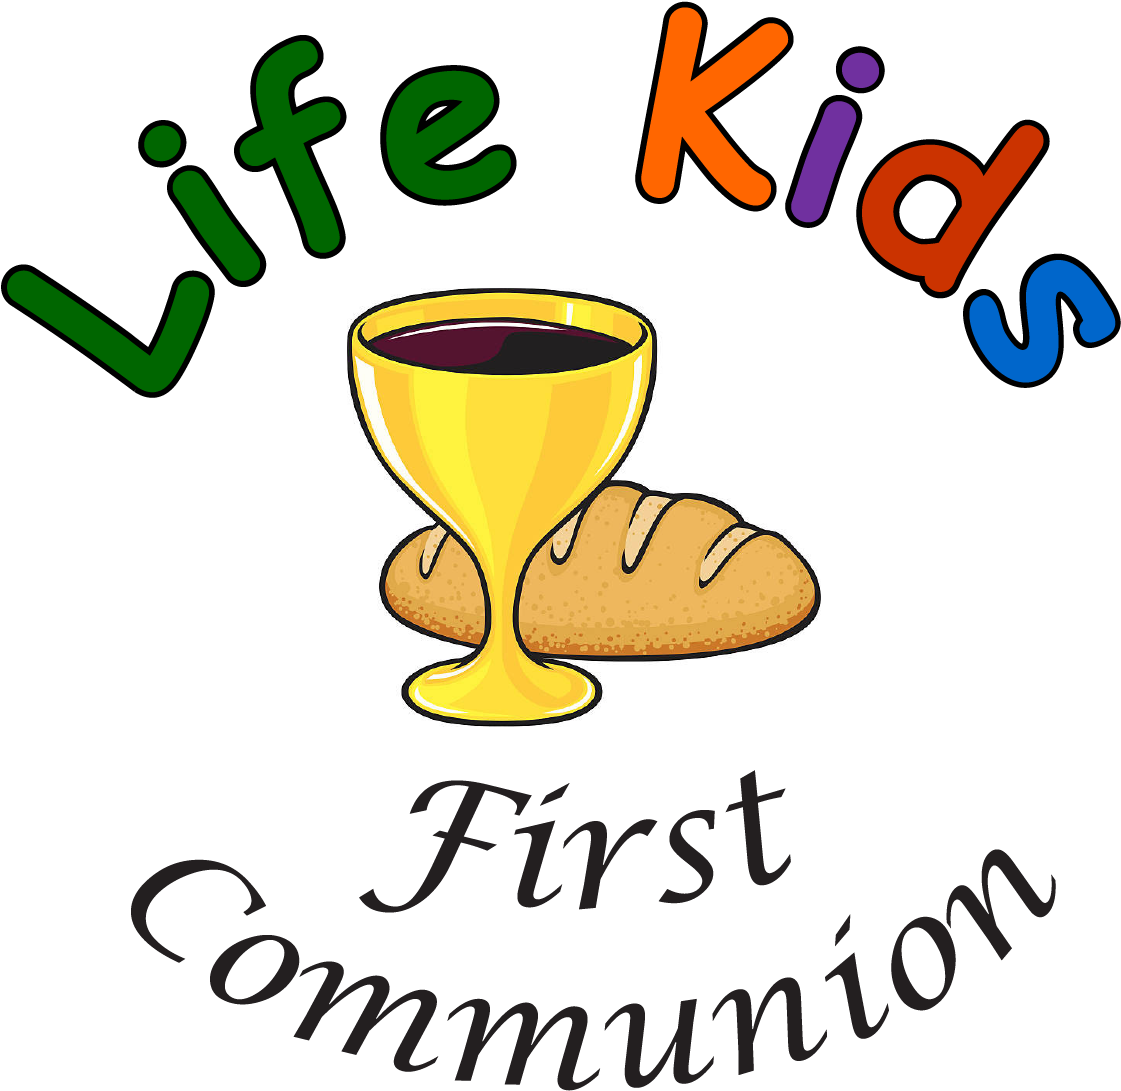 Life Kids 2018-2019 - Child (1310x1213)